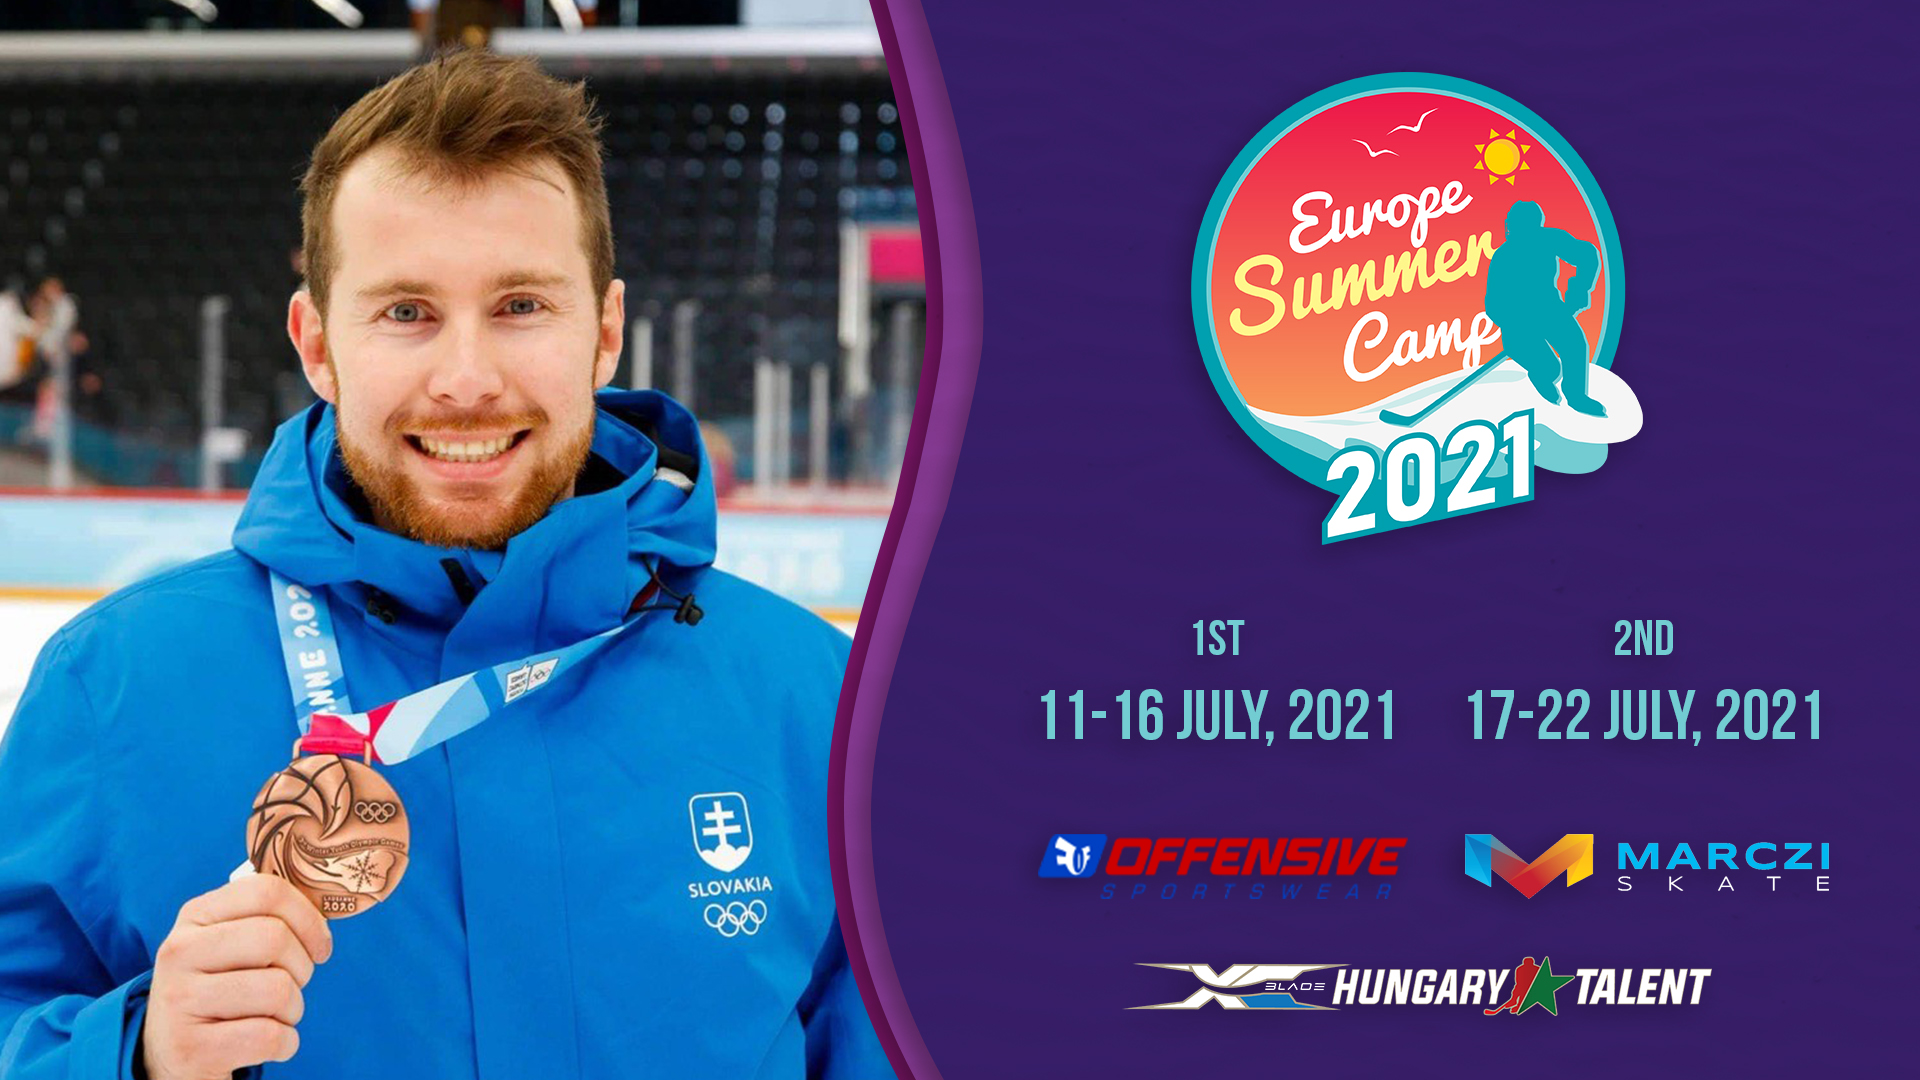 Interjú Tomas Seginnel, a Europe Summer Camp edzőjével